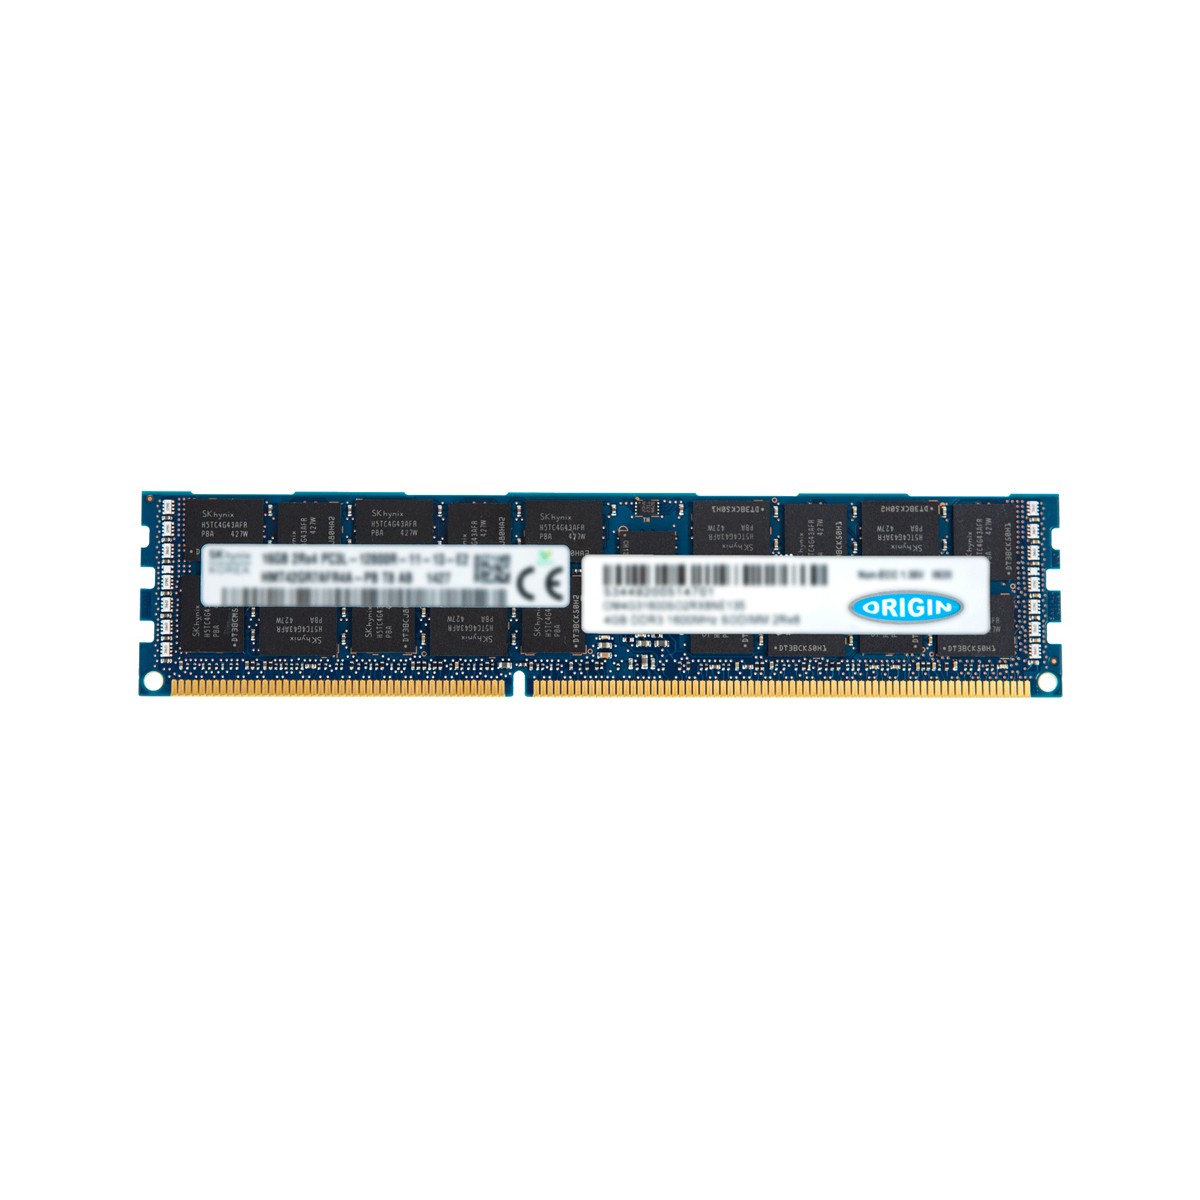 Lenovo Memory 16 GB 1600 MHz PC3-12800 FULLY BUFFERED ECC - 16 GB - DDR3